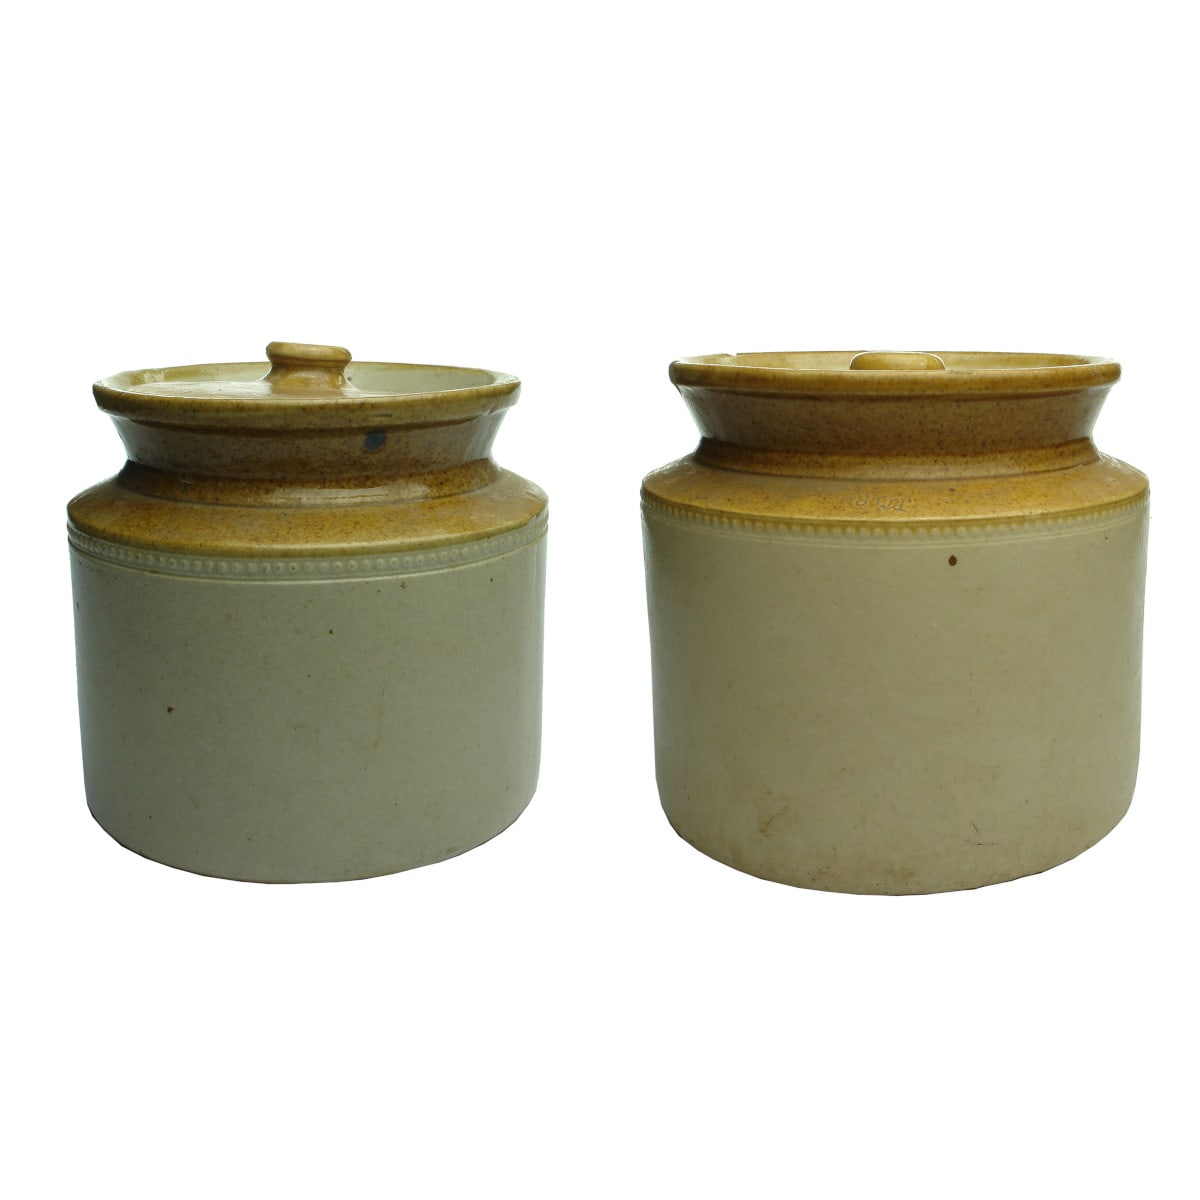 Pottery. Pair of lidded crocks, large is 3 quart.